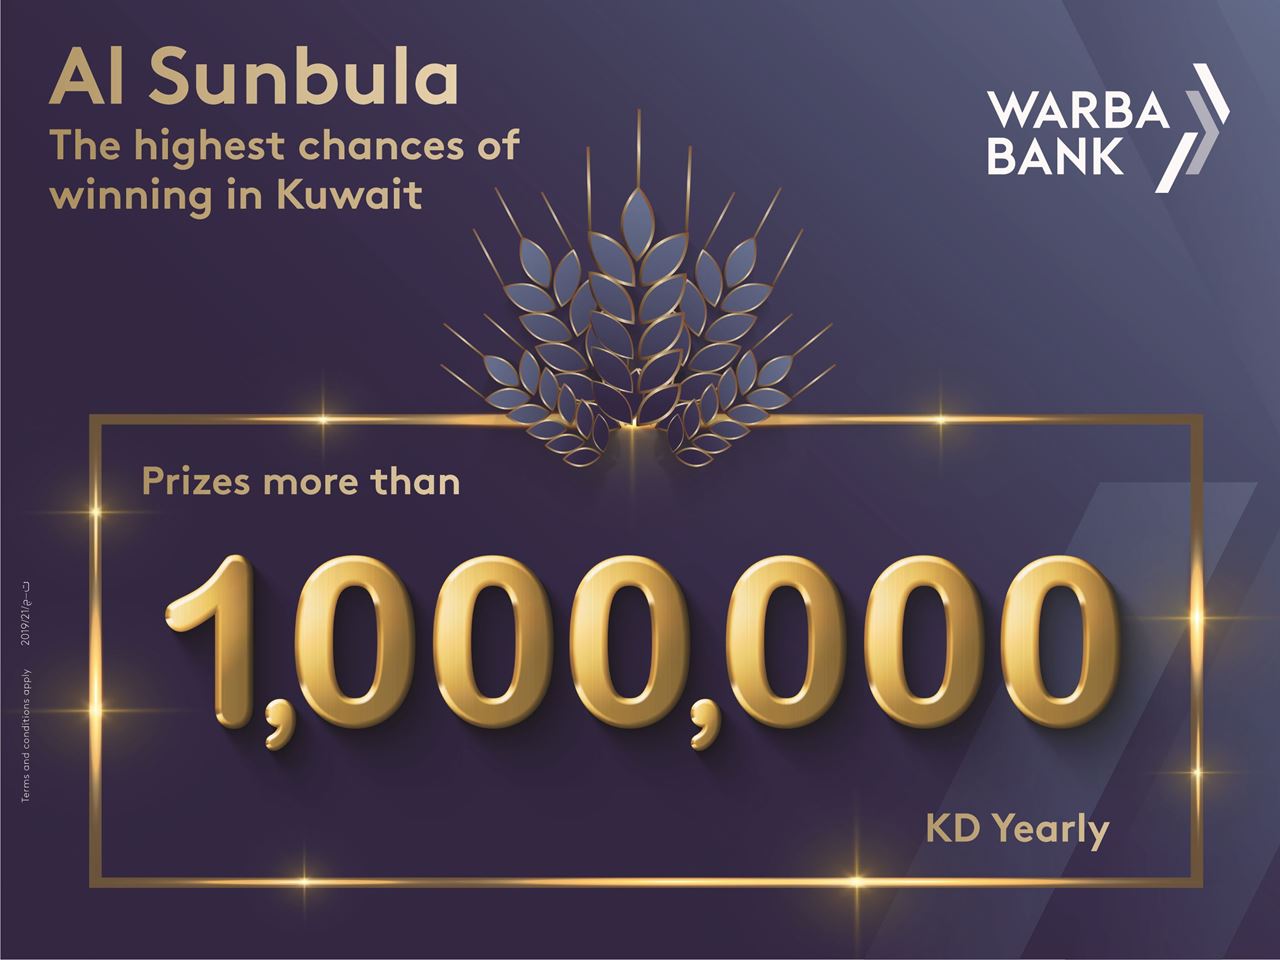 Warba Bank Announces “Al Sunbula” Draws